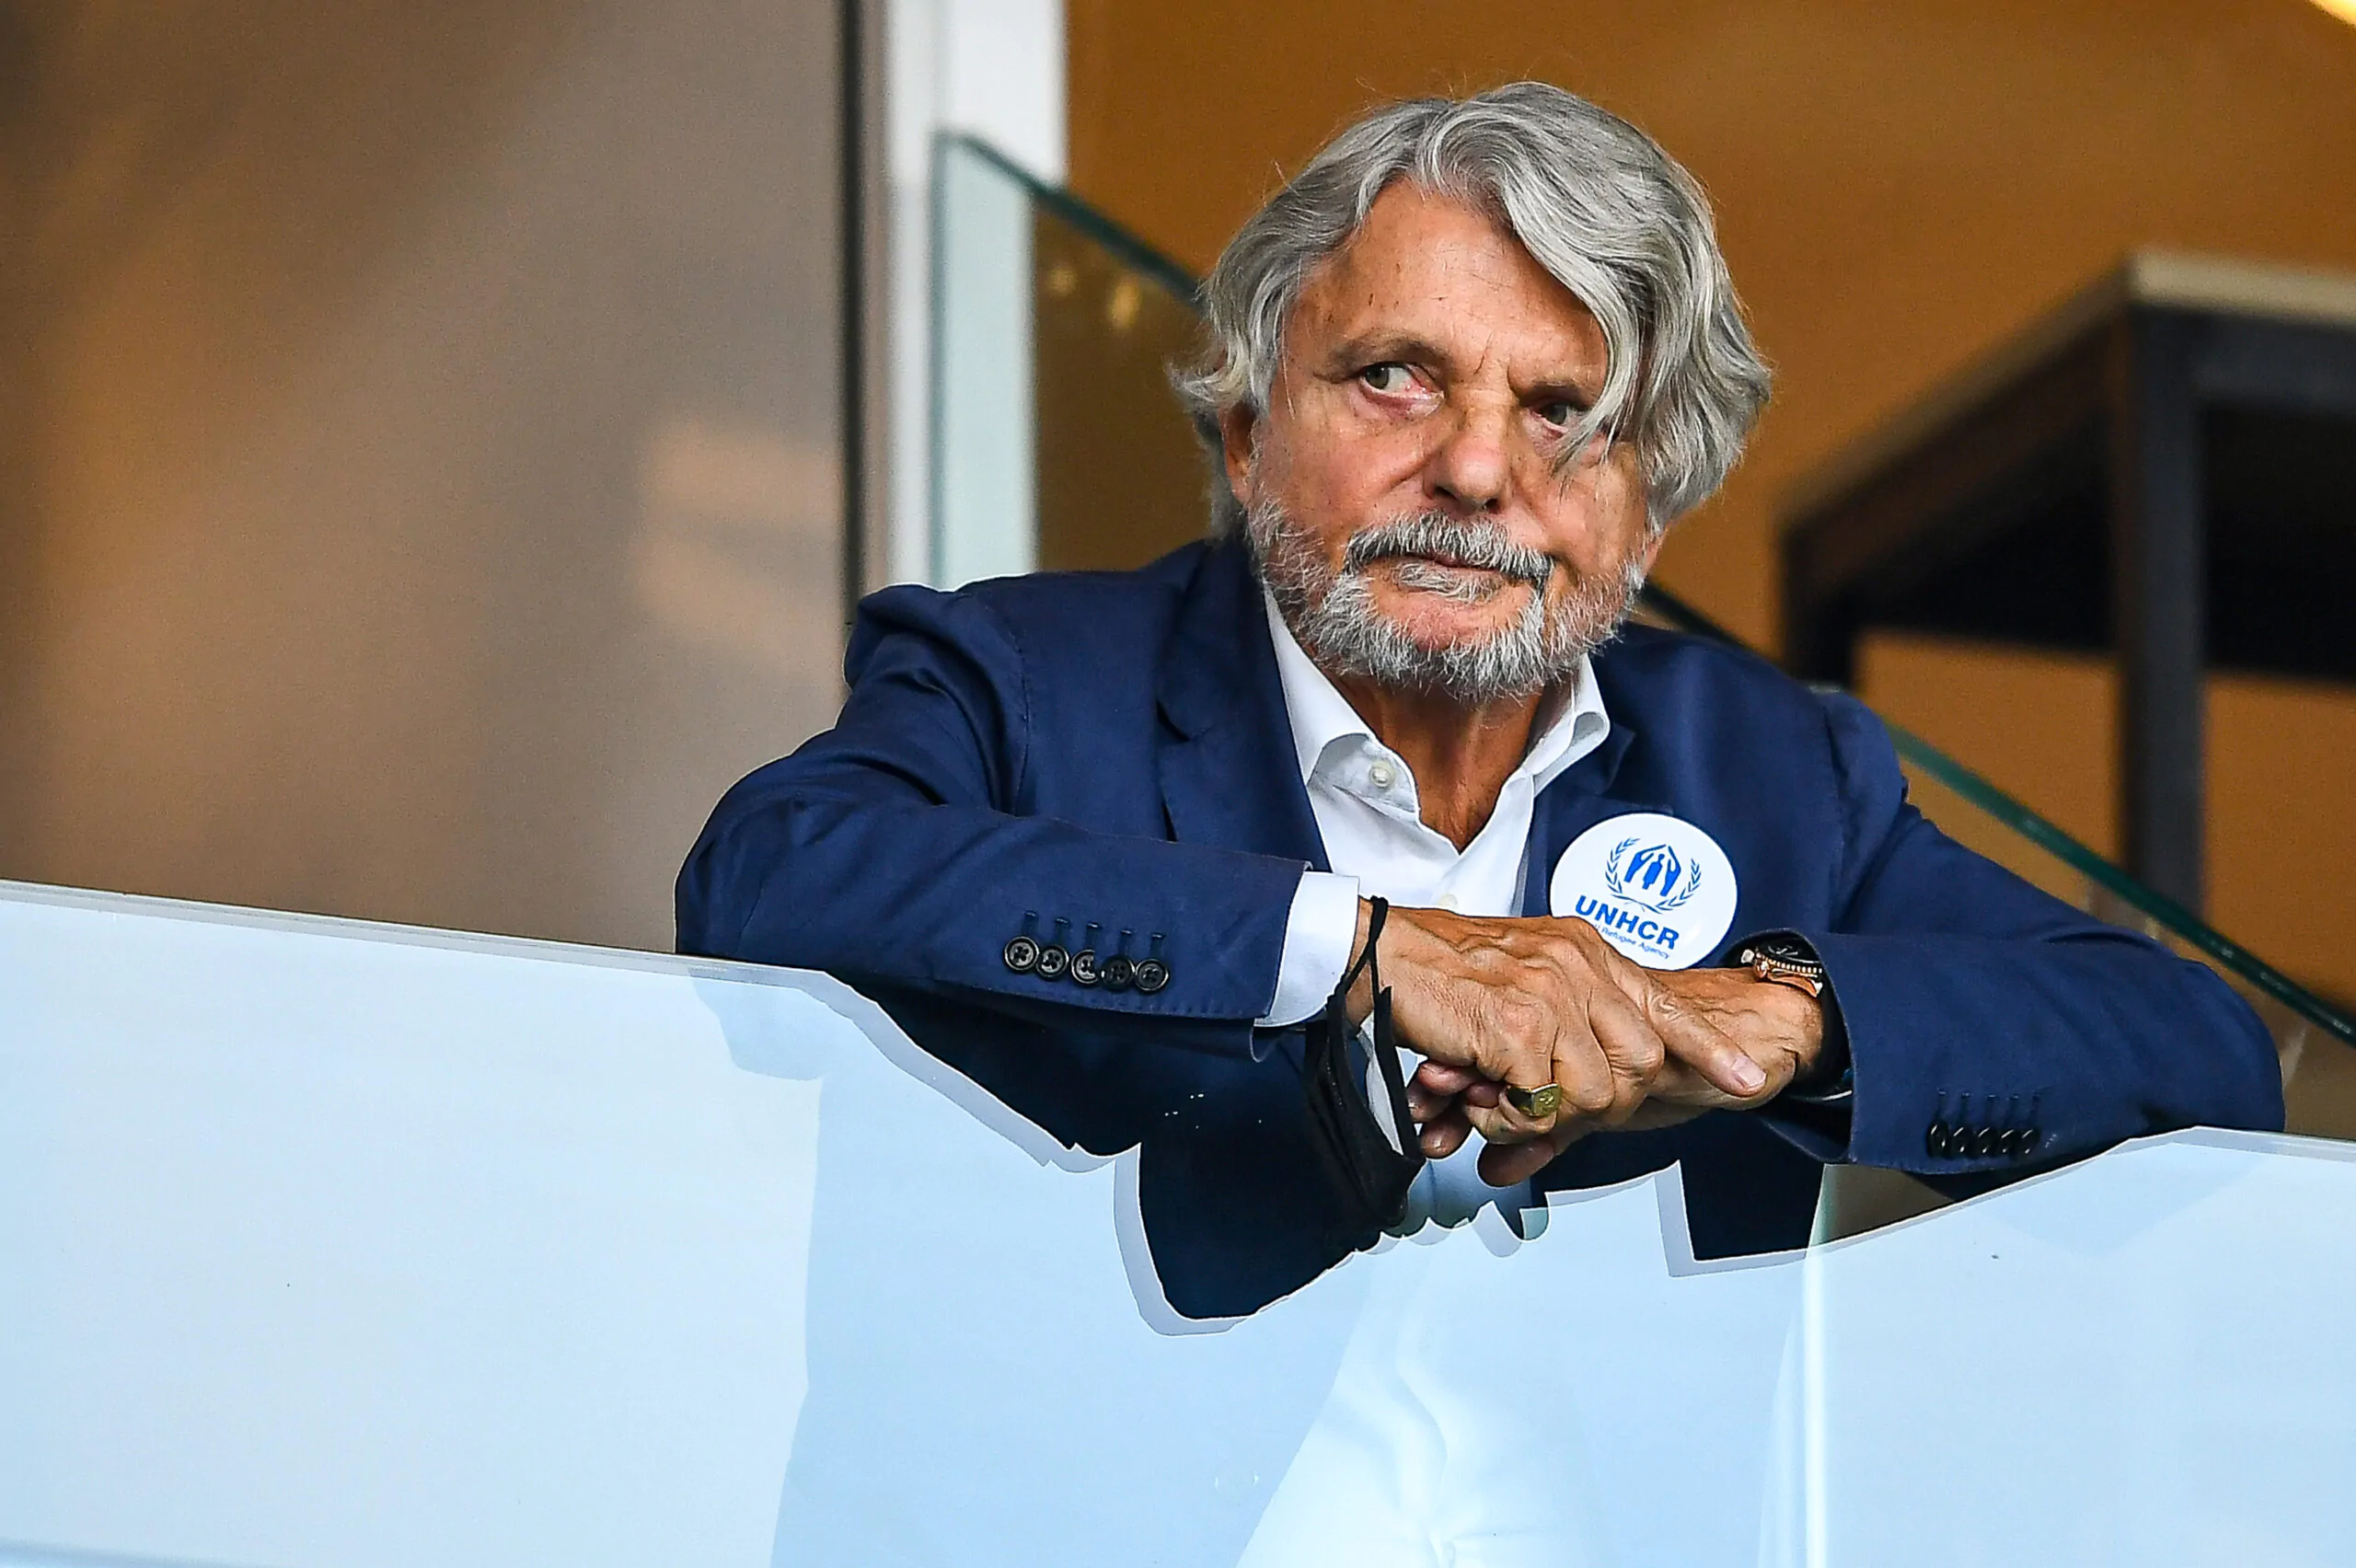 Ferrero allo stadio per Sampdoria-Roma, aperta un’indagine: cosa rischia